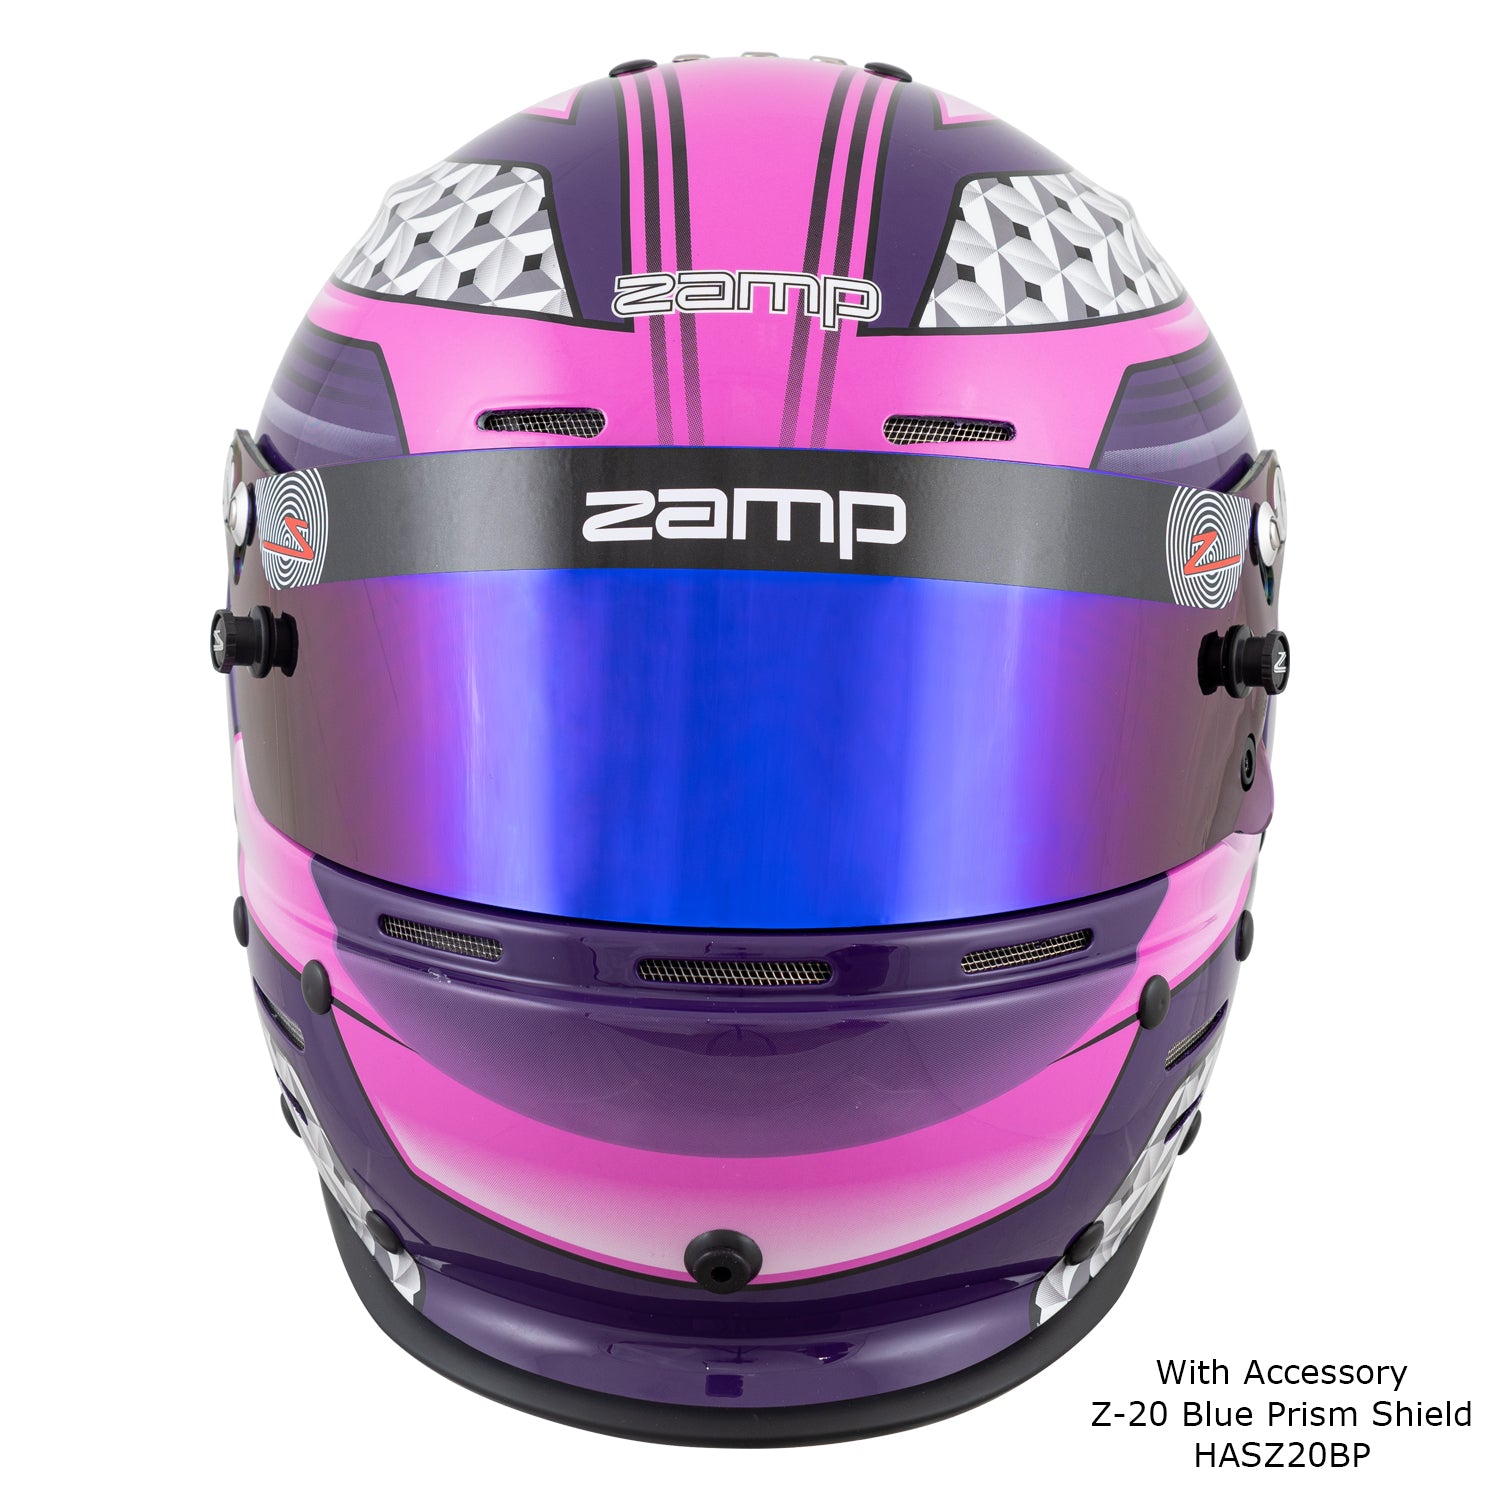 Zamp RZ-62 Graphic Helmet, Snell SA-2020